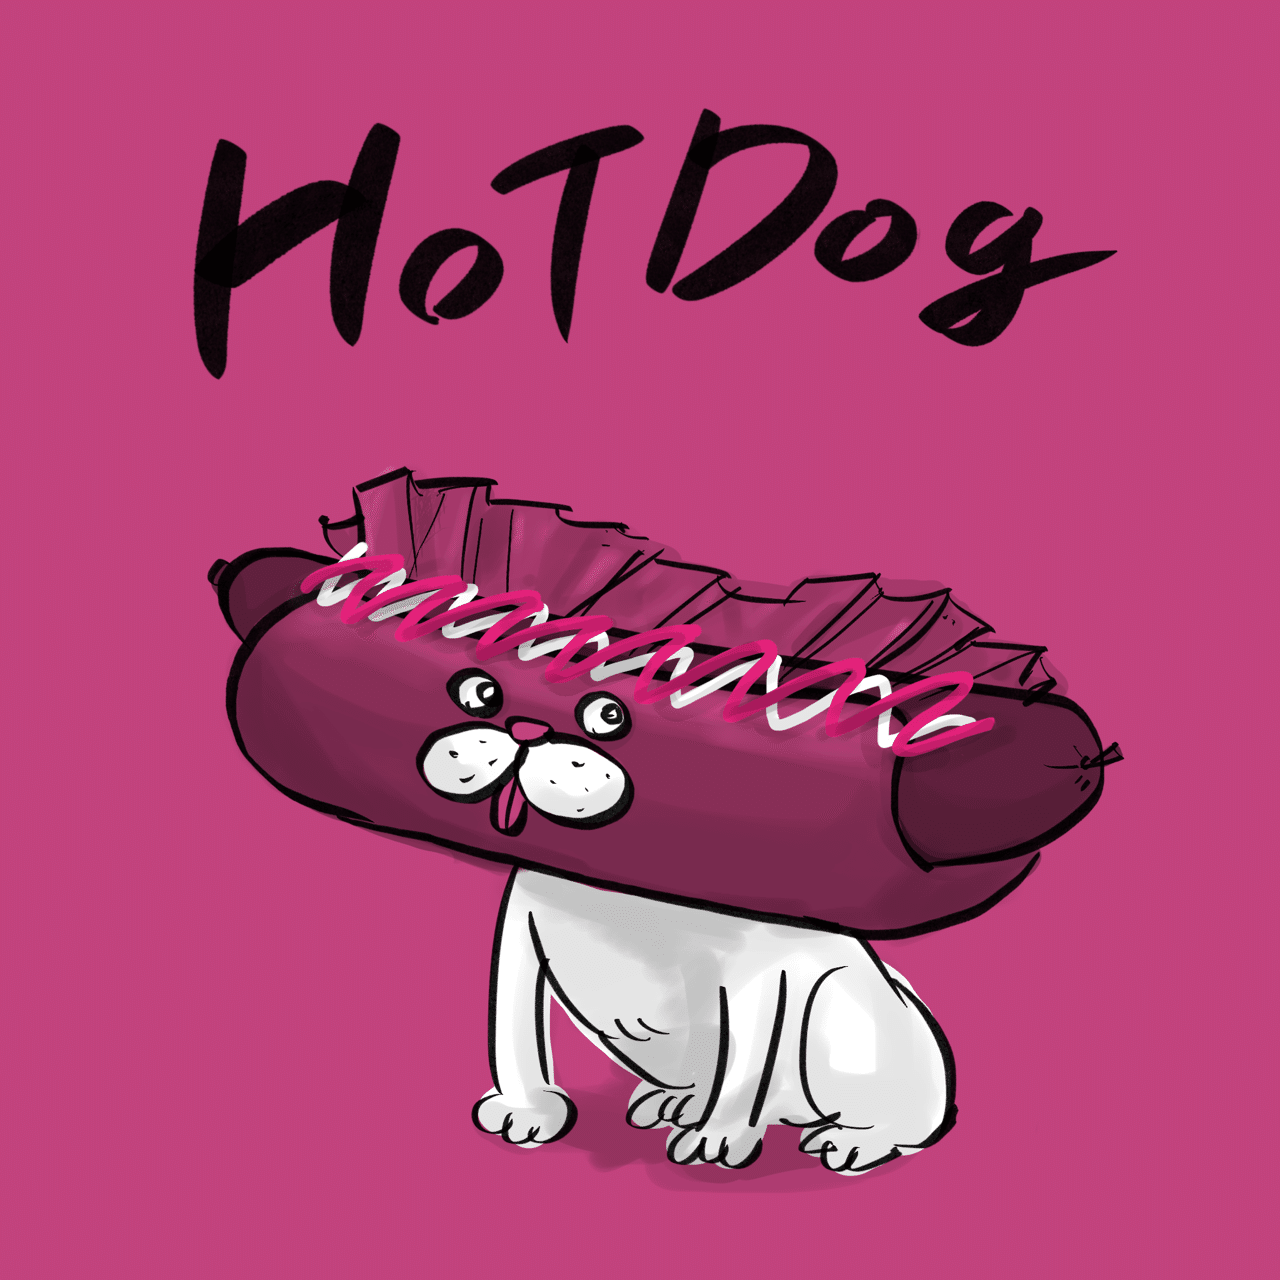 Hot Dog 小田ロケット Note